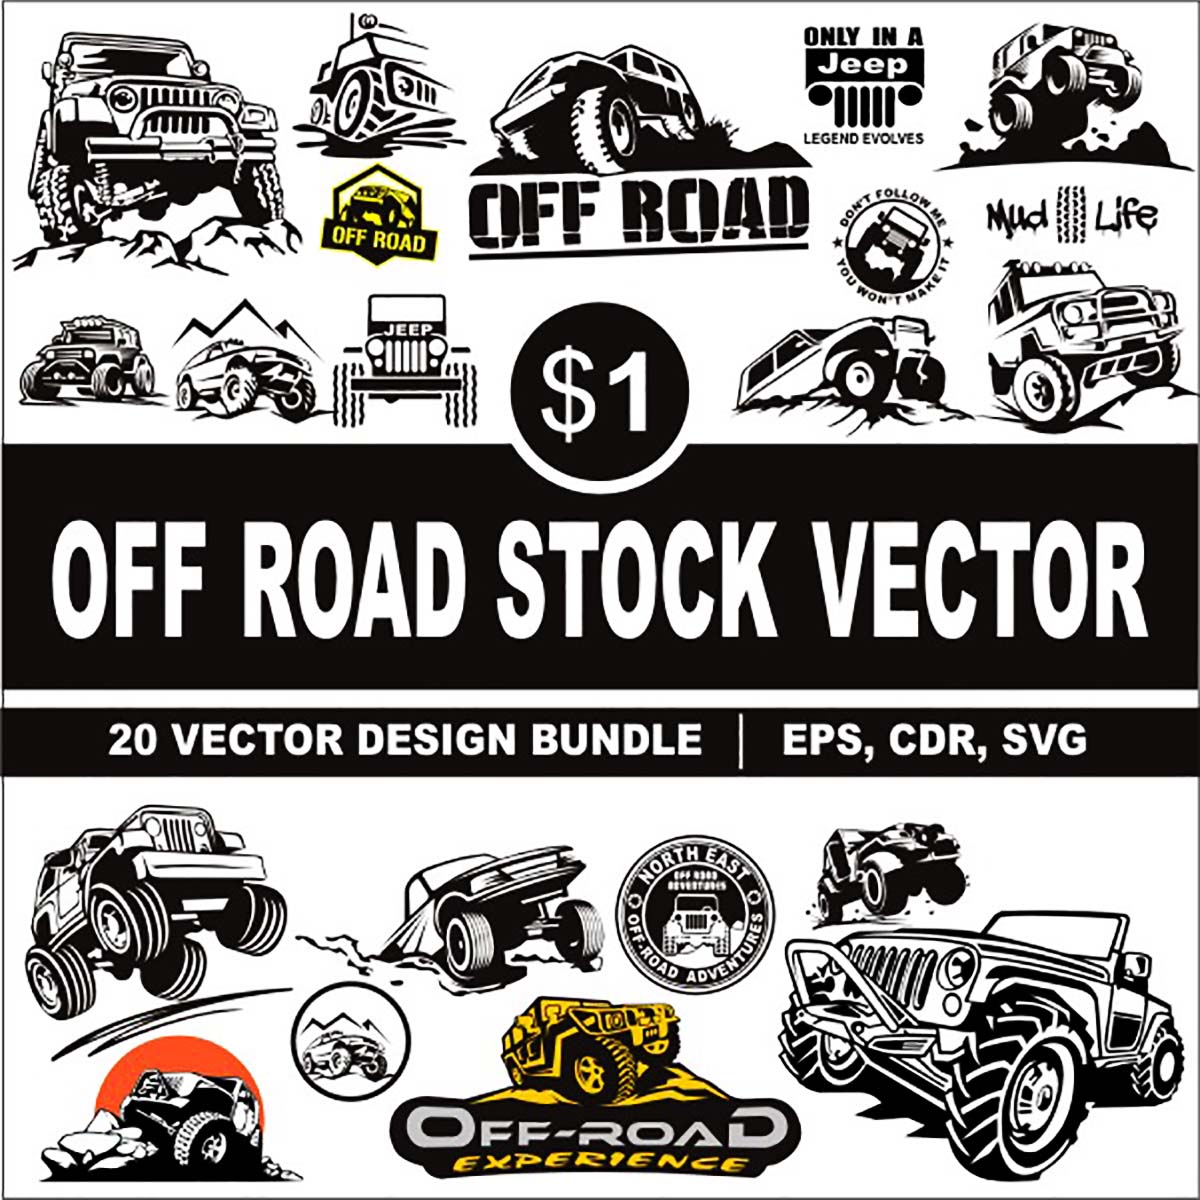 Off Road Truck Stock Vector design illustration cover image.